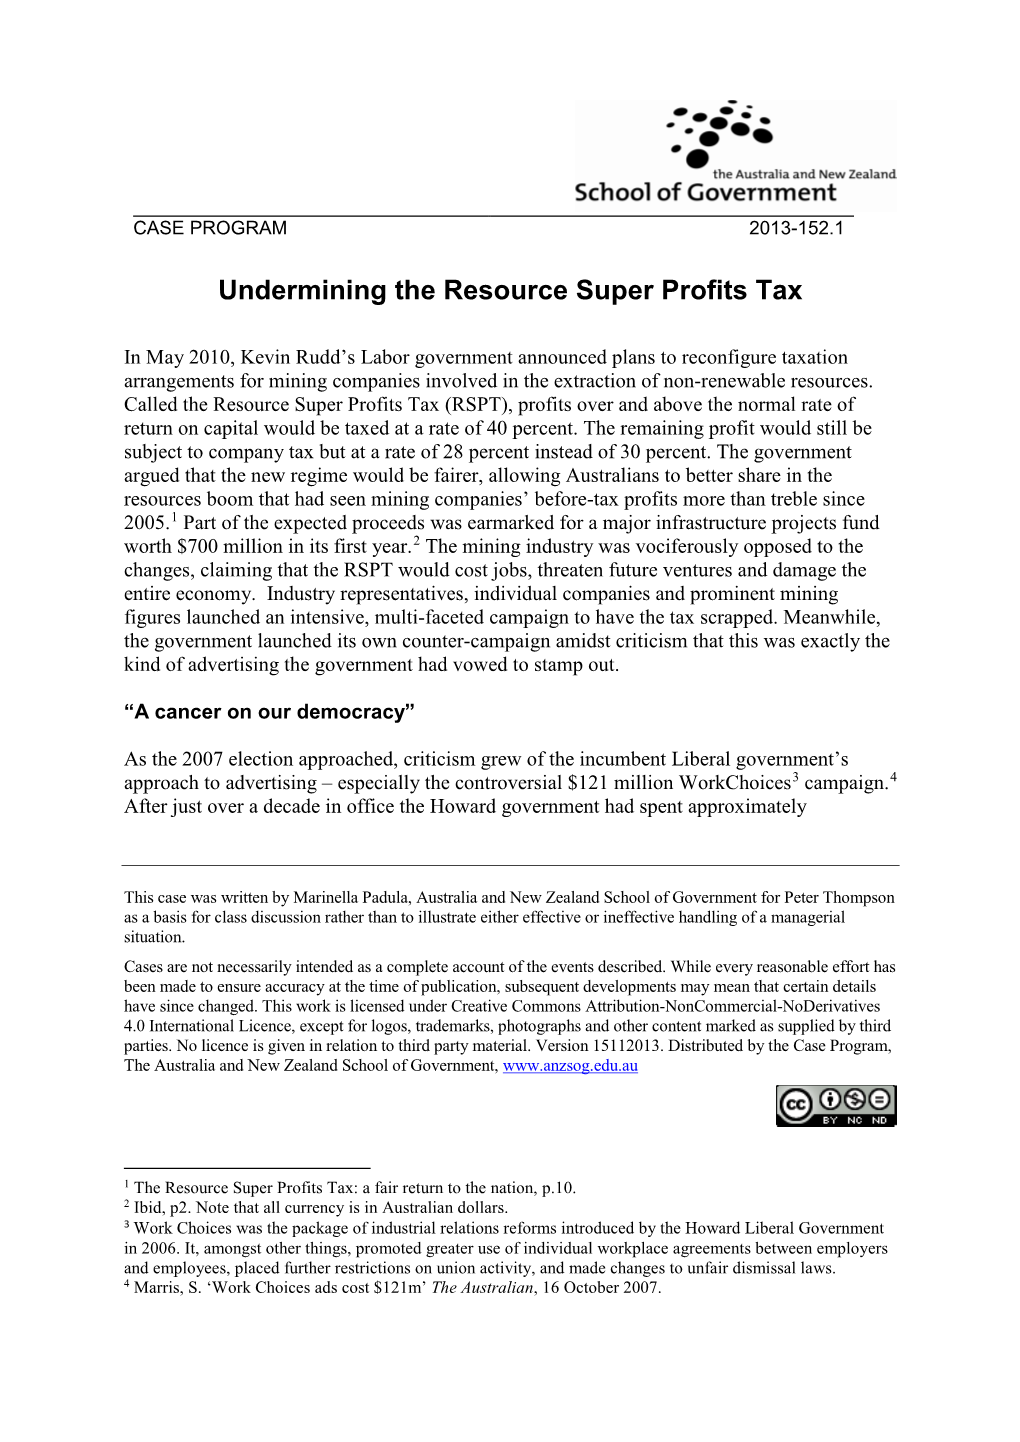 Undermining the Resource Super Profits Tax